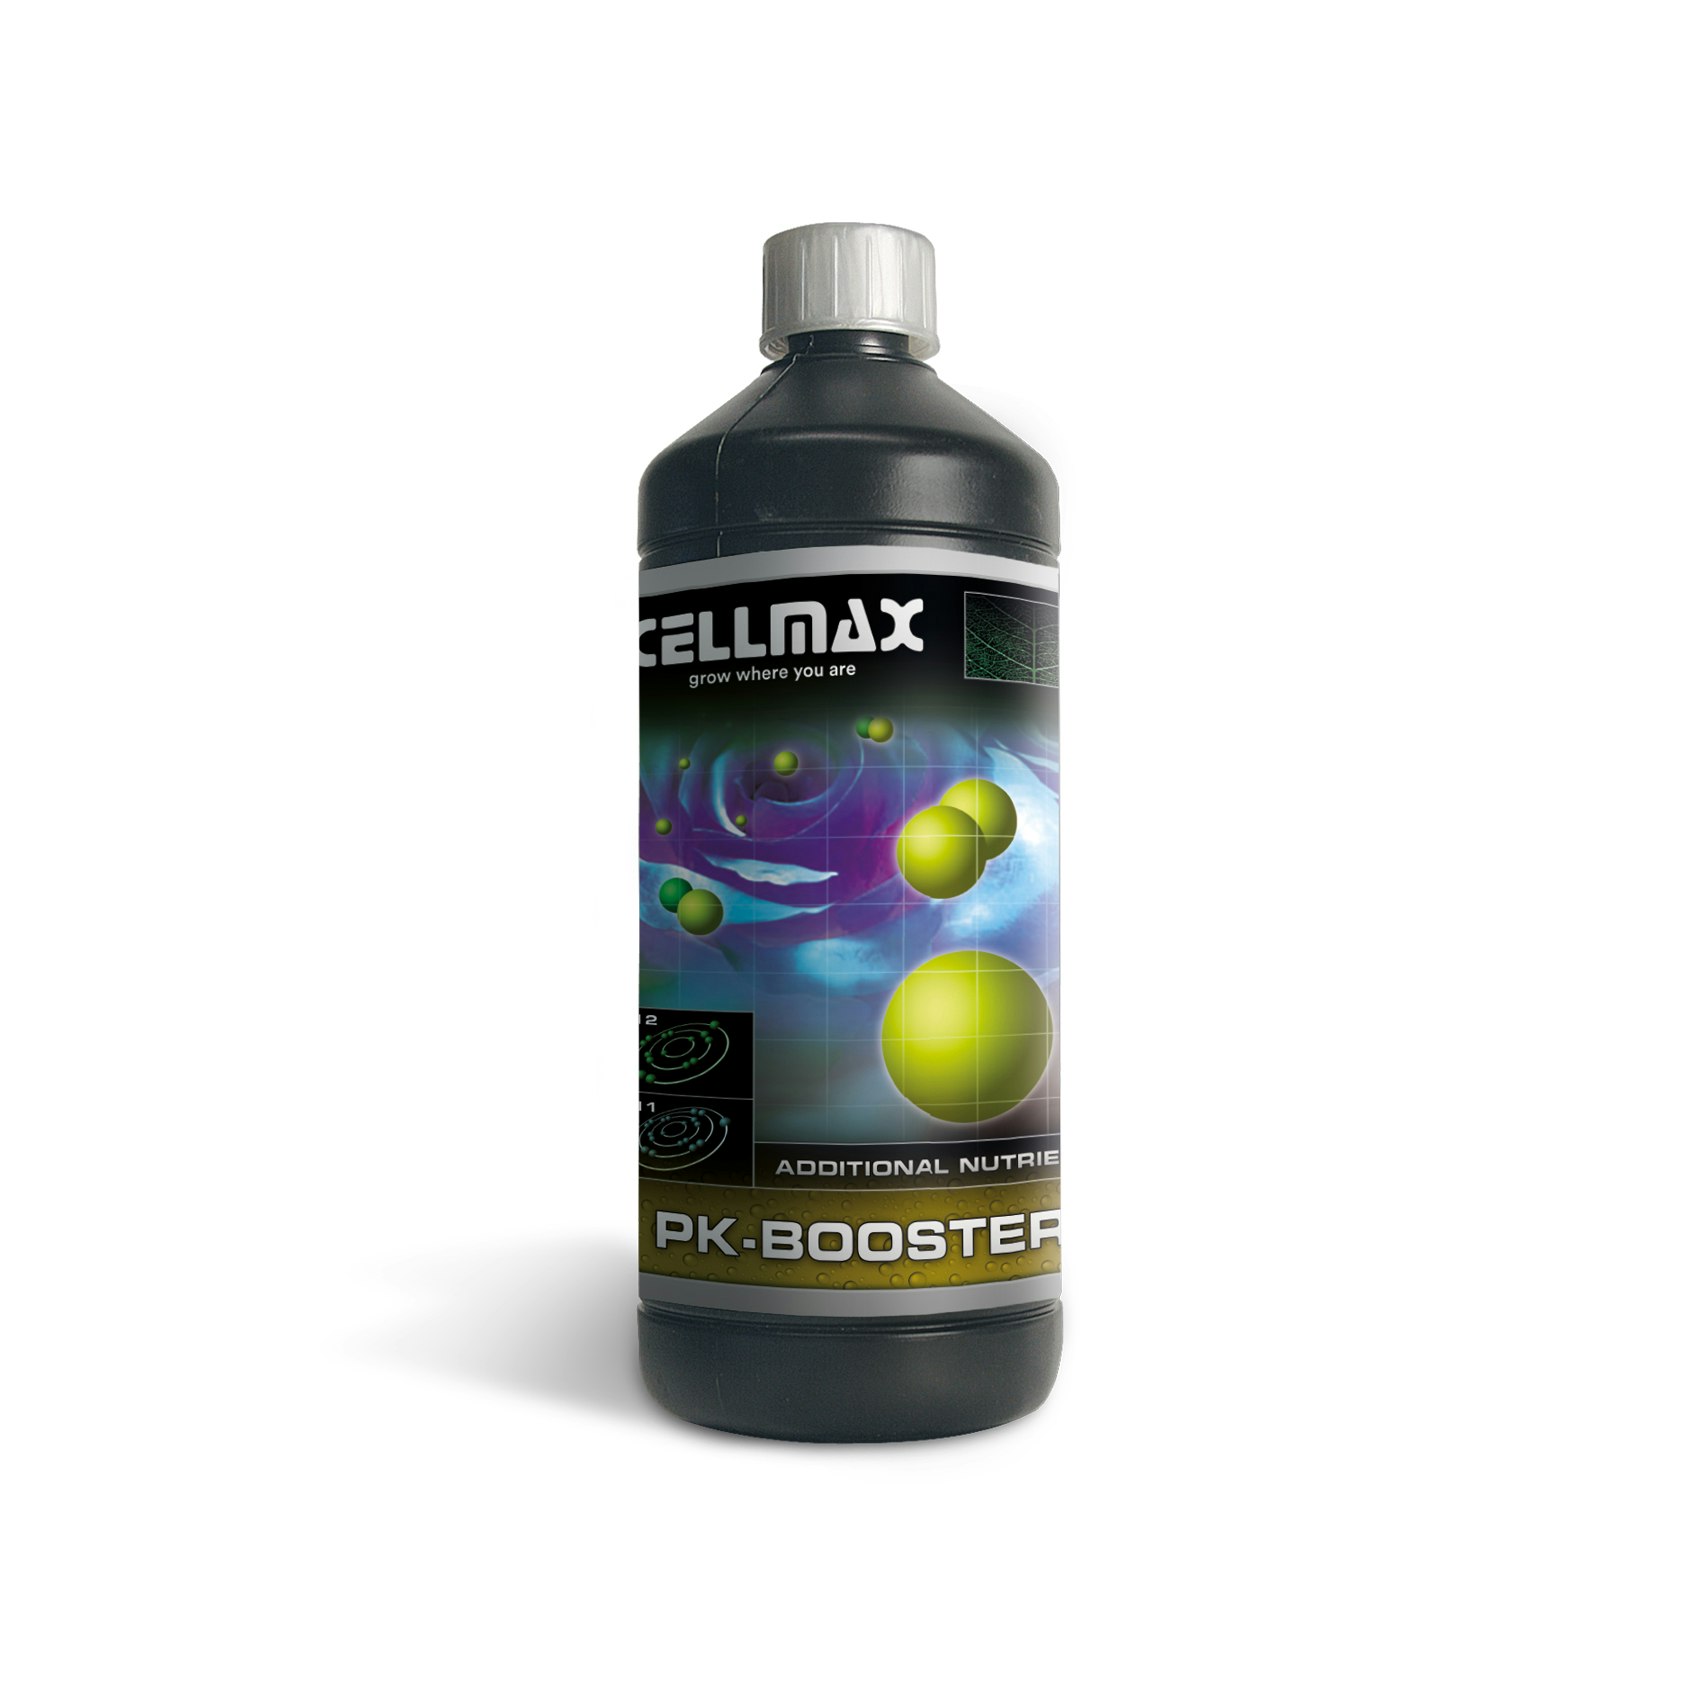 Hydro - Cellmax Komplett Paket